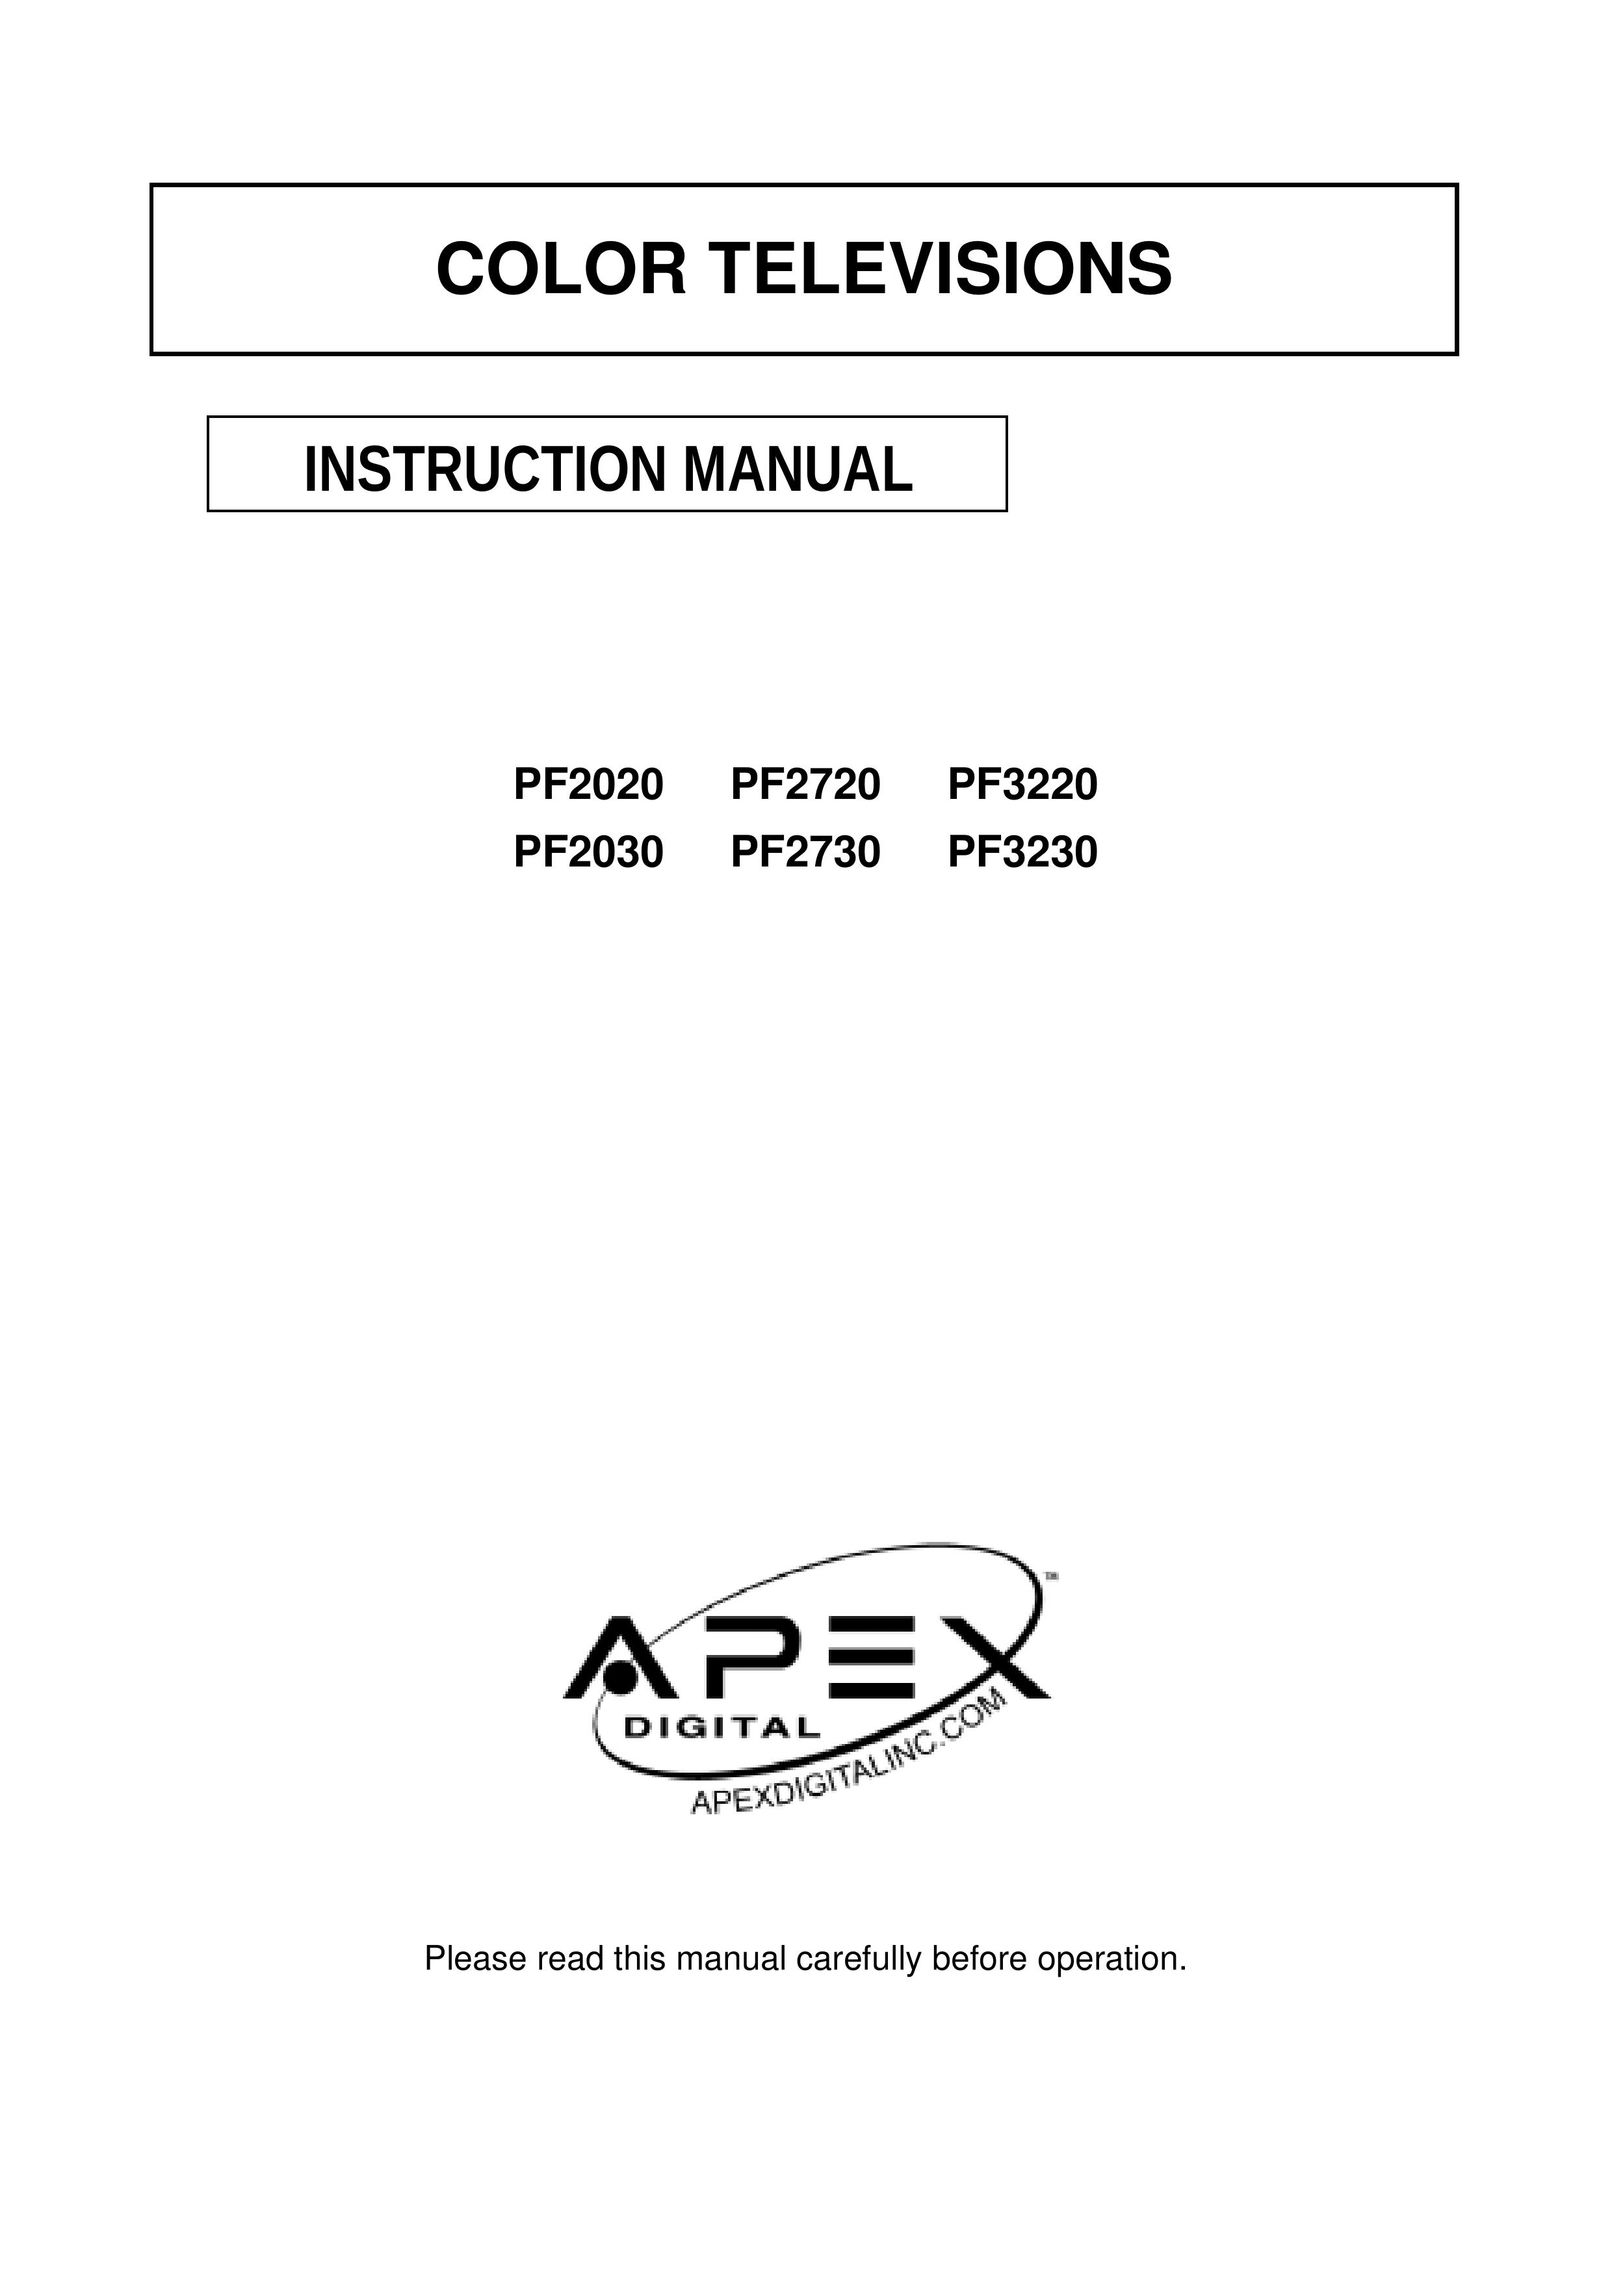 Apex Digital PF2020 CRT Television User Manual